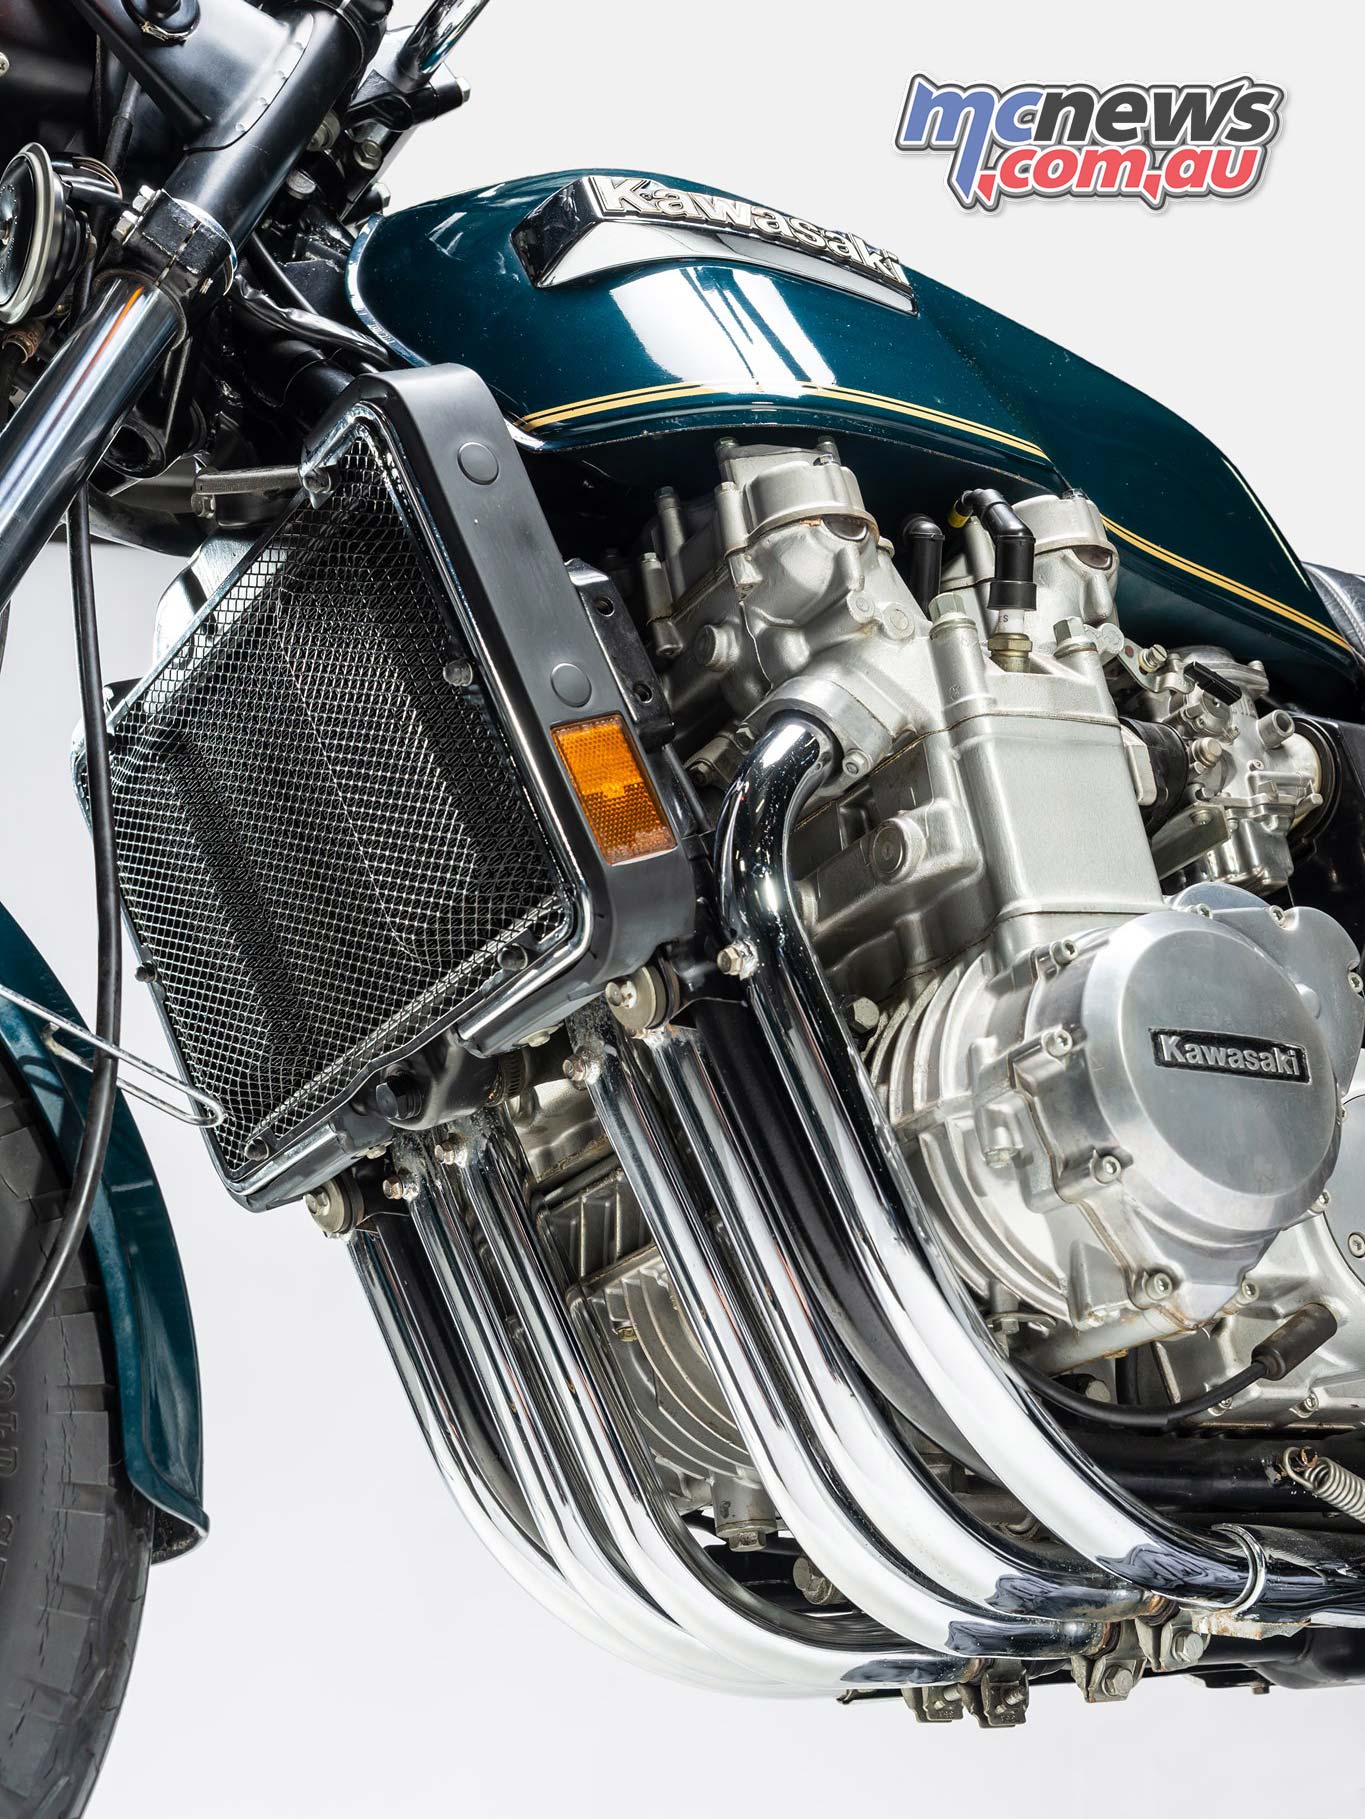 frimærke rack rig Video Of The Week | Kawasaki Z1300 six-cylinder | MCNews